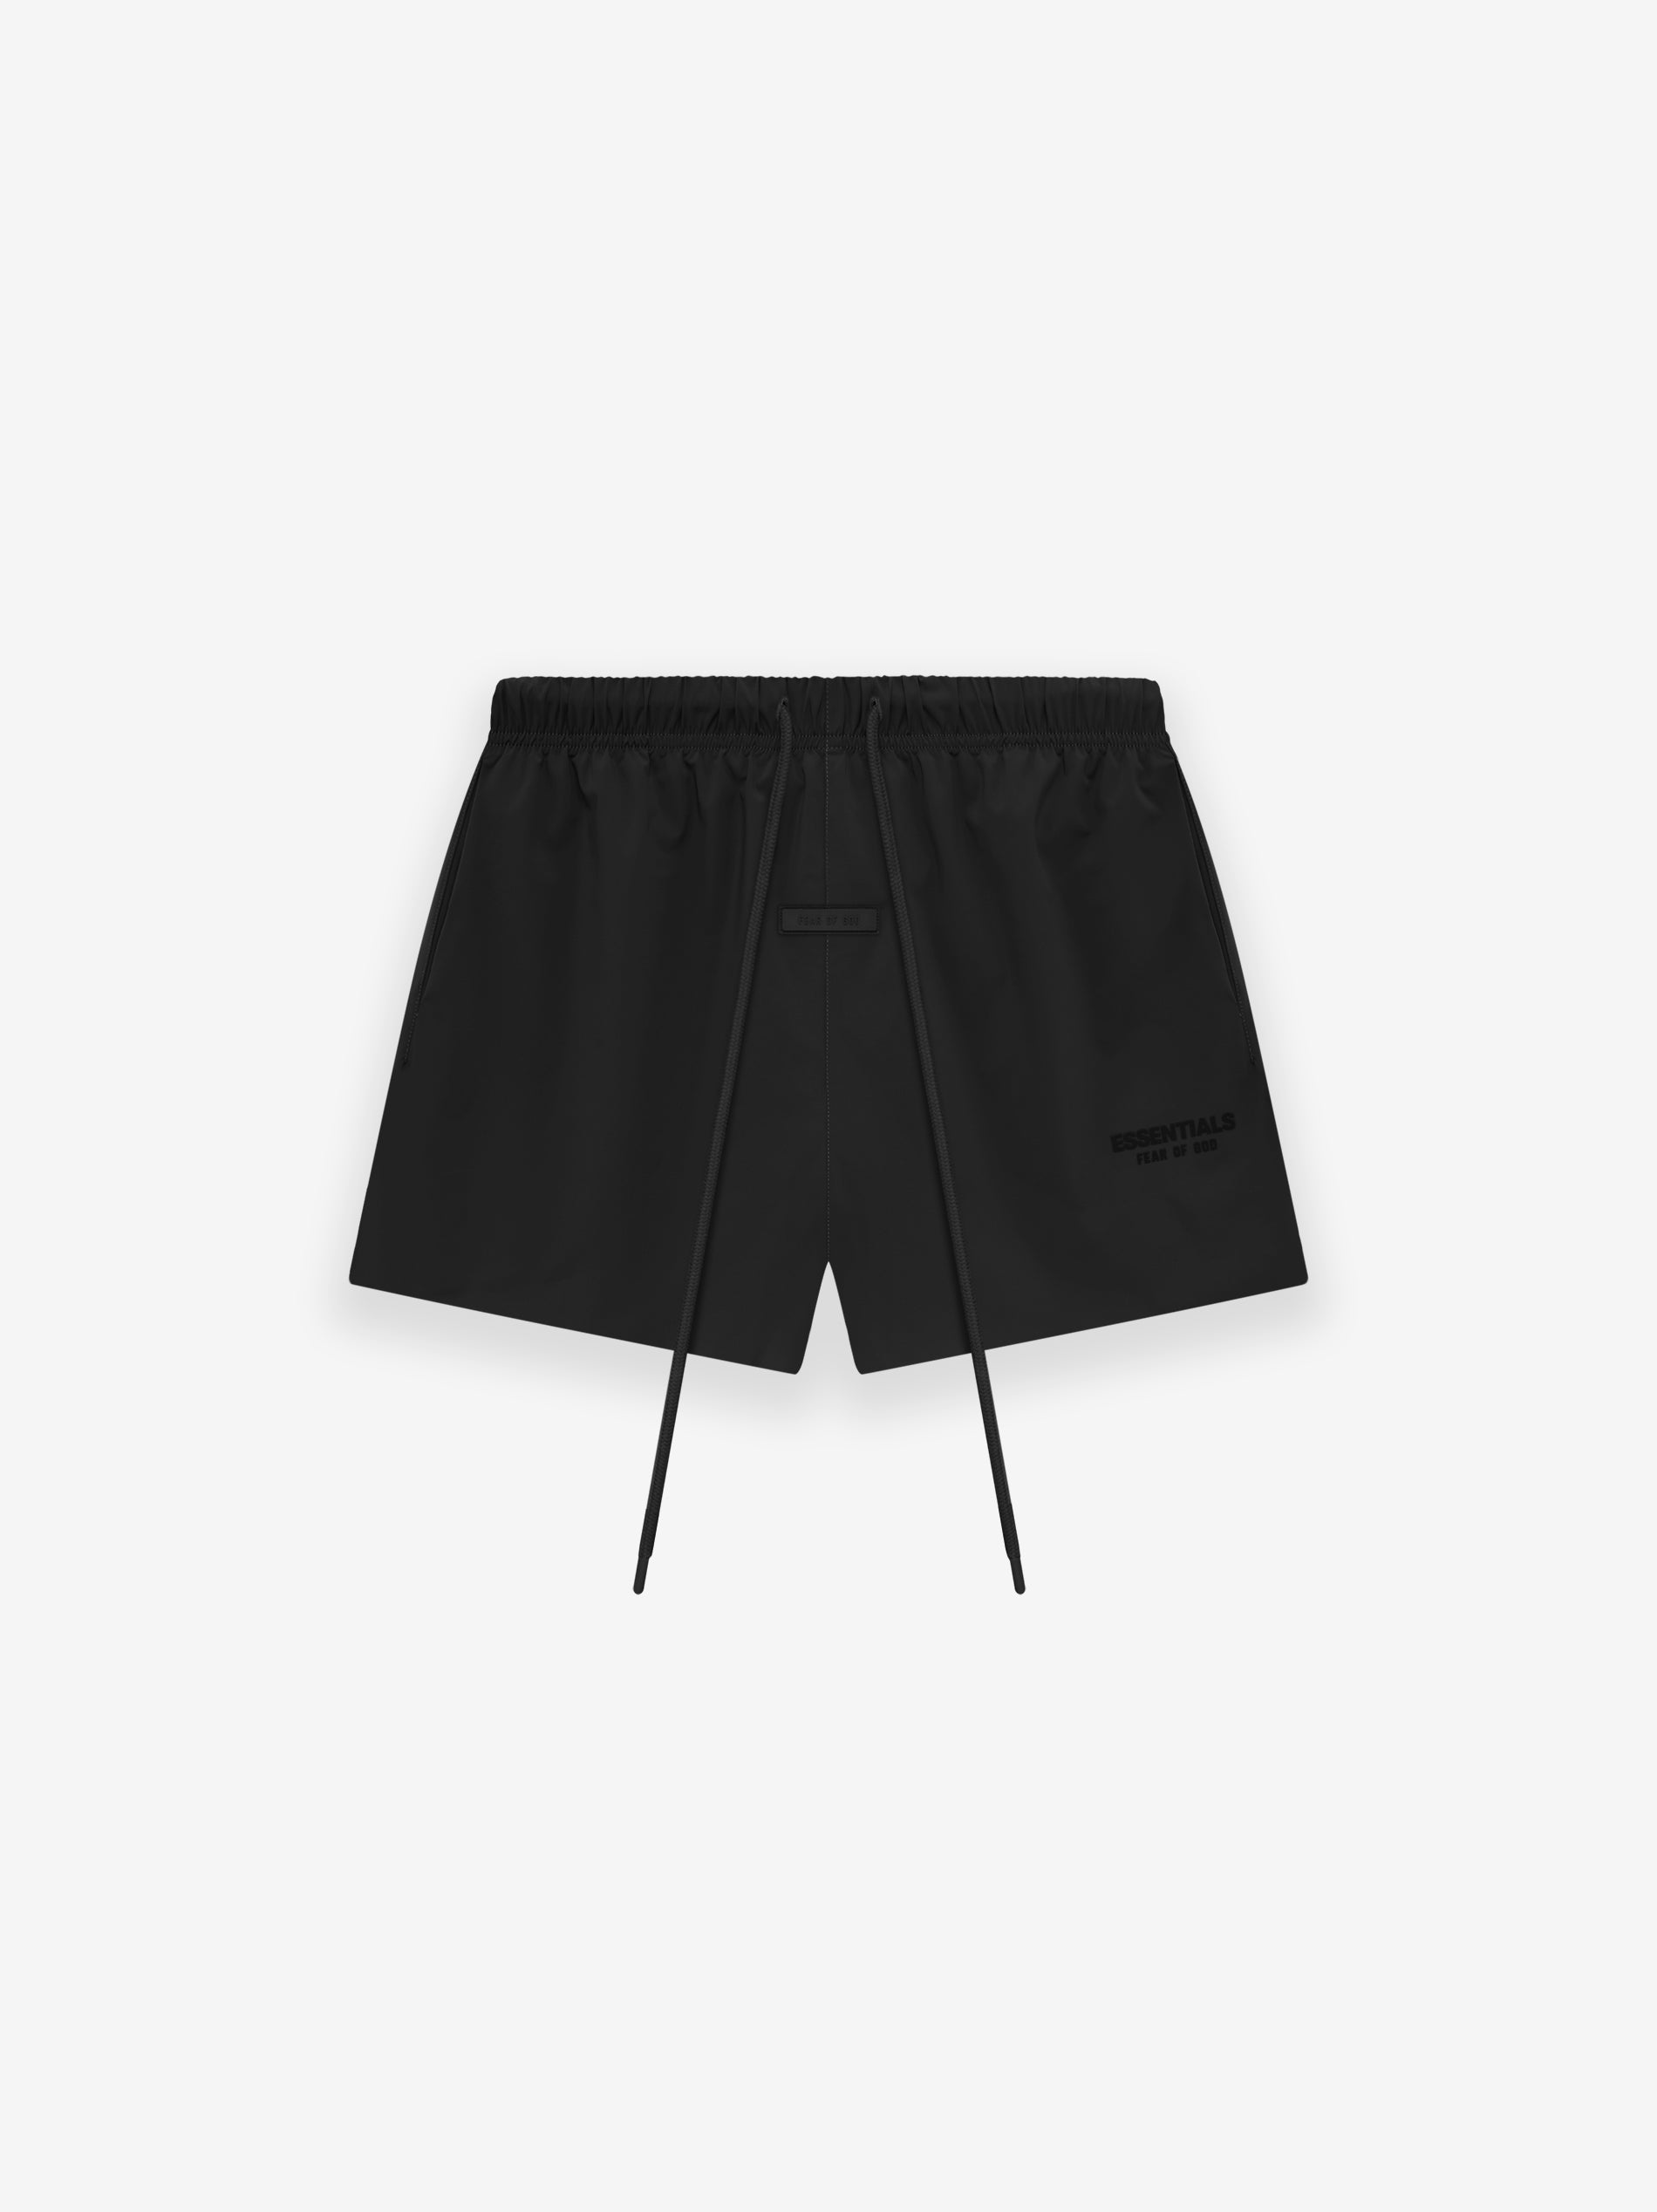 Black Drawstring Shorts by Fear of God on Sale